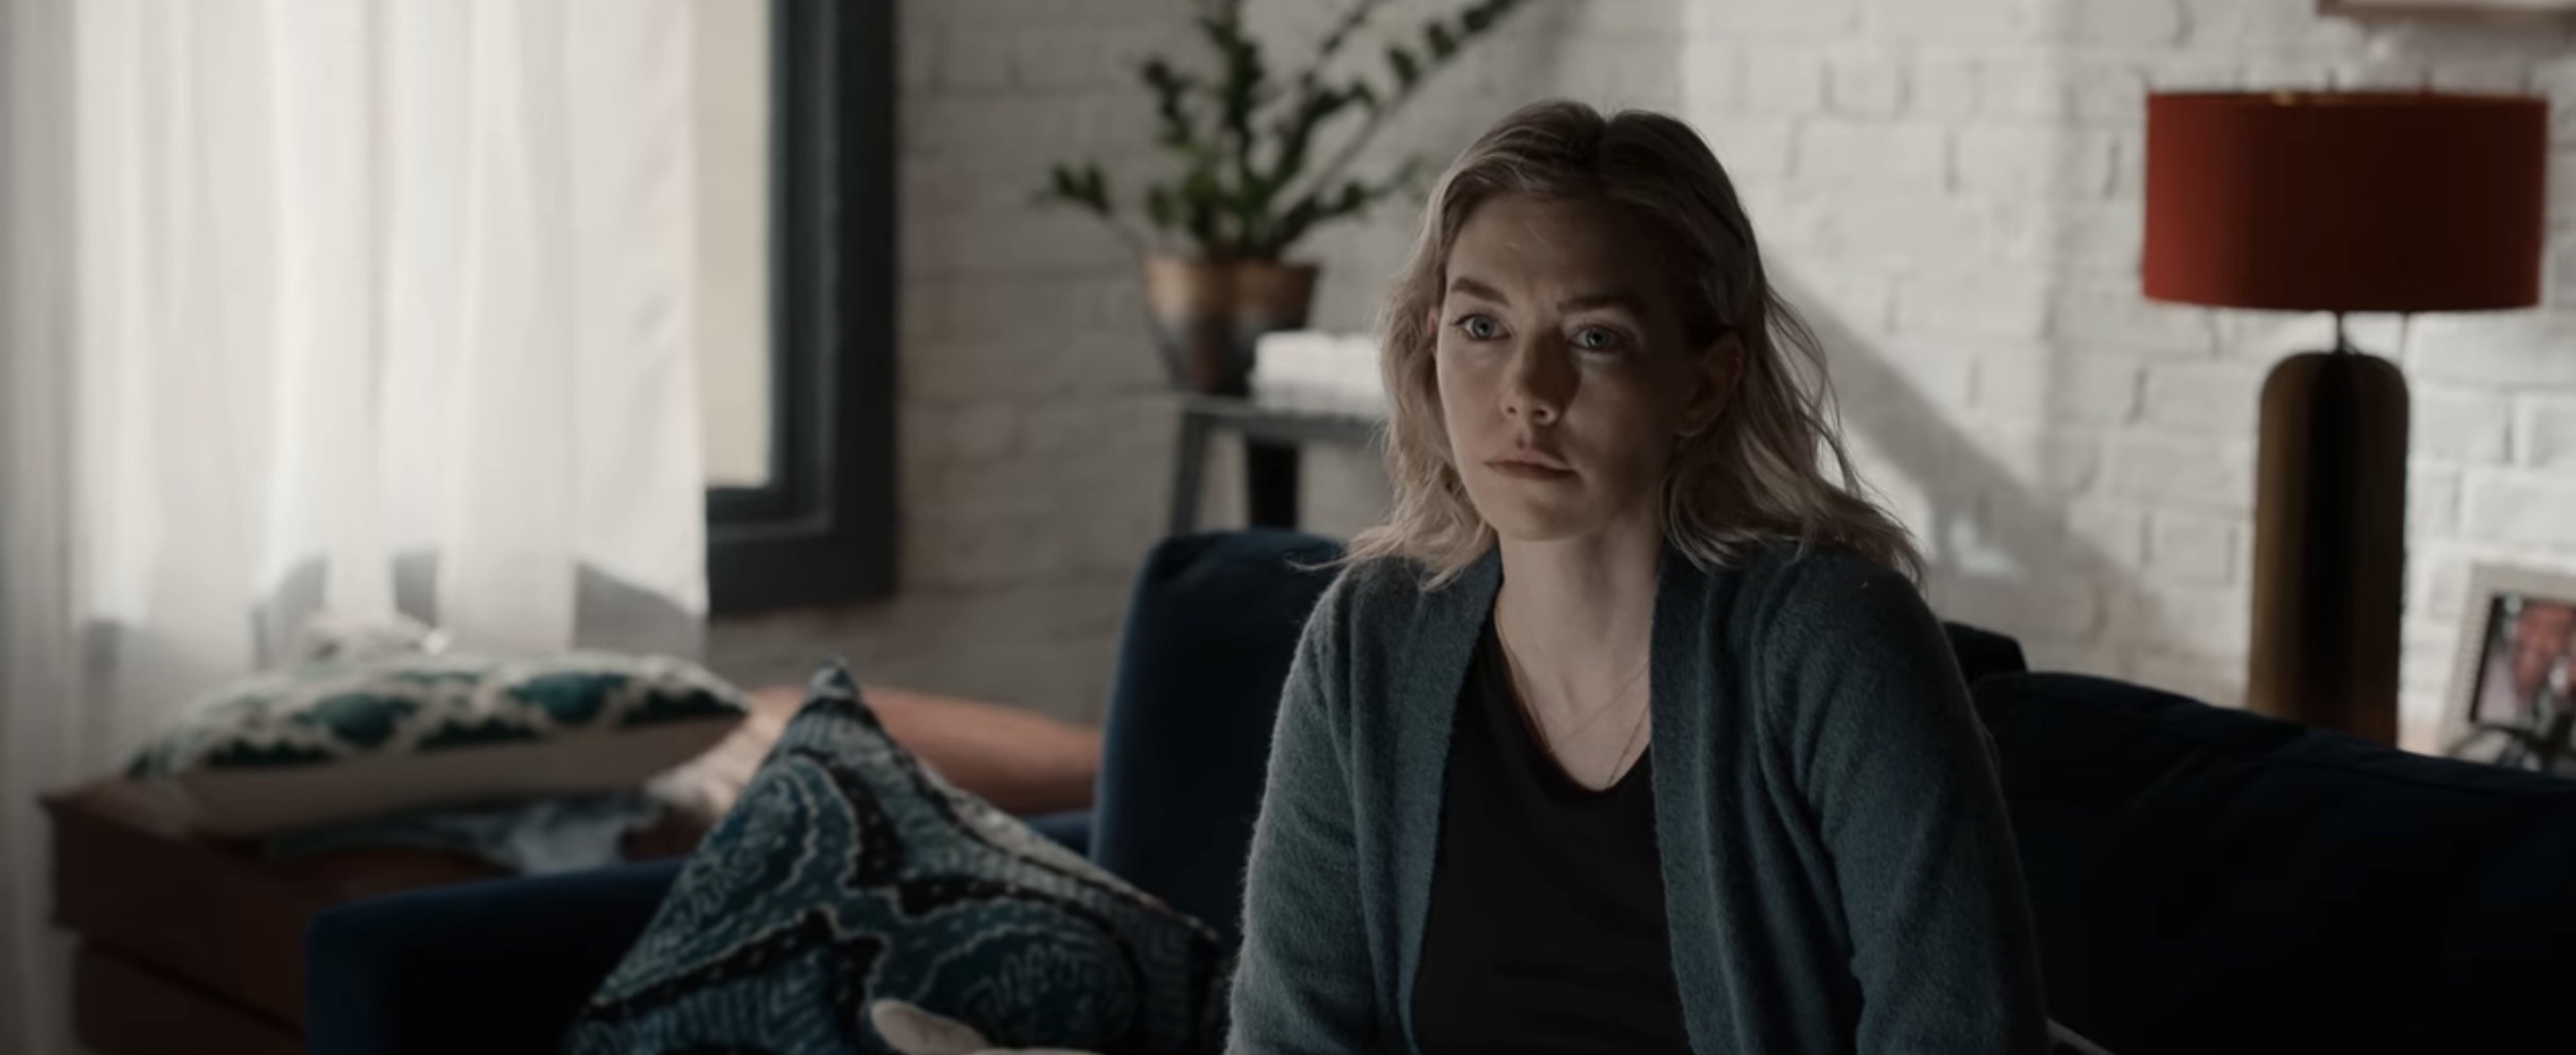 The Son Cast on Netflix - Vanessa Kirby as Beth